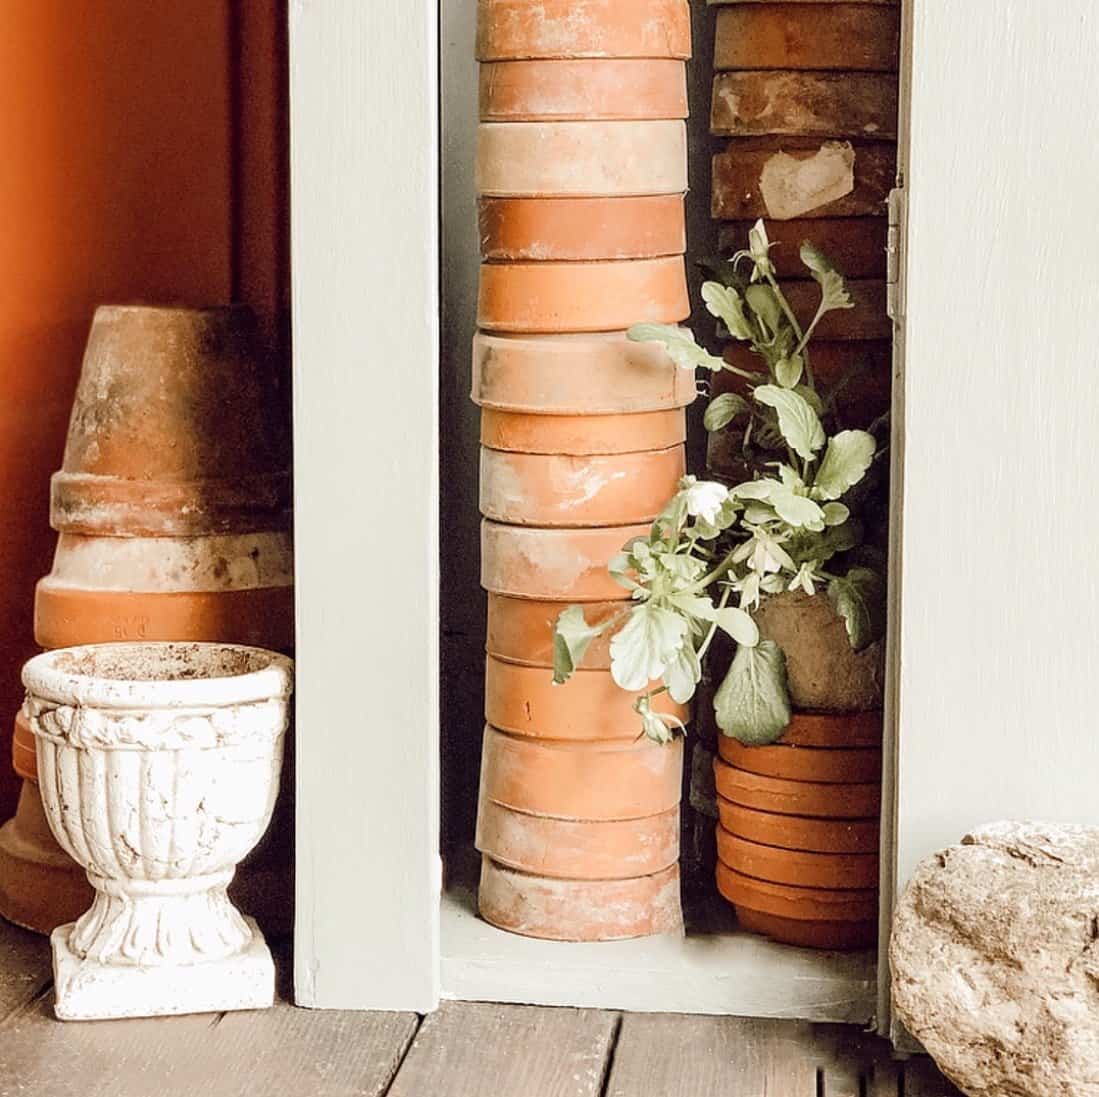 A Garden Cupboard with Terracotta Pots